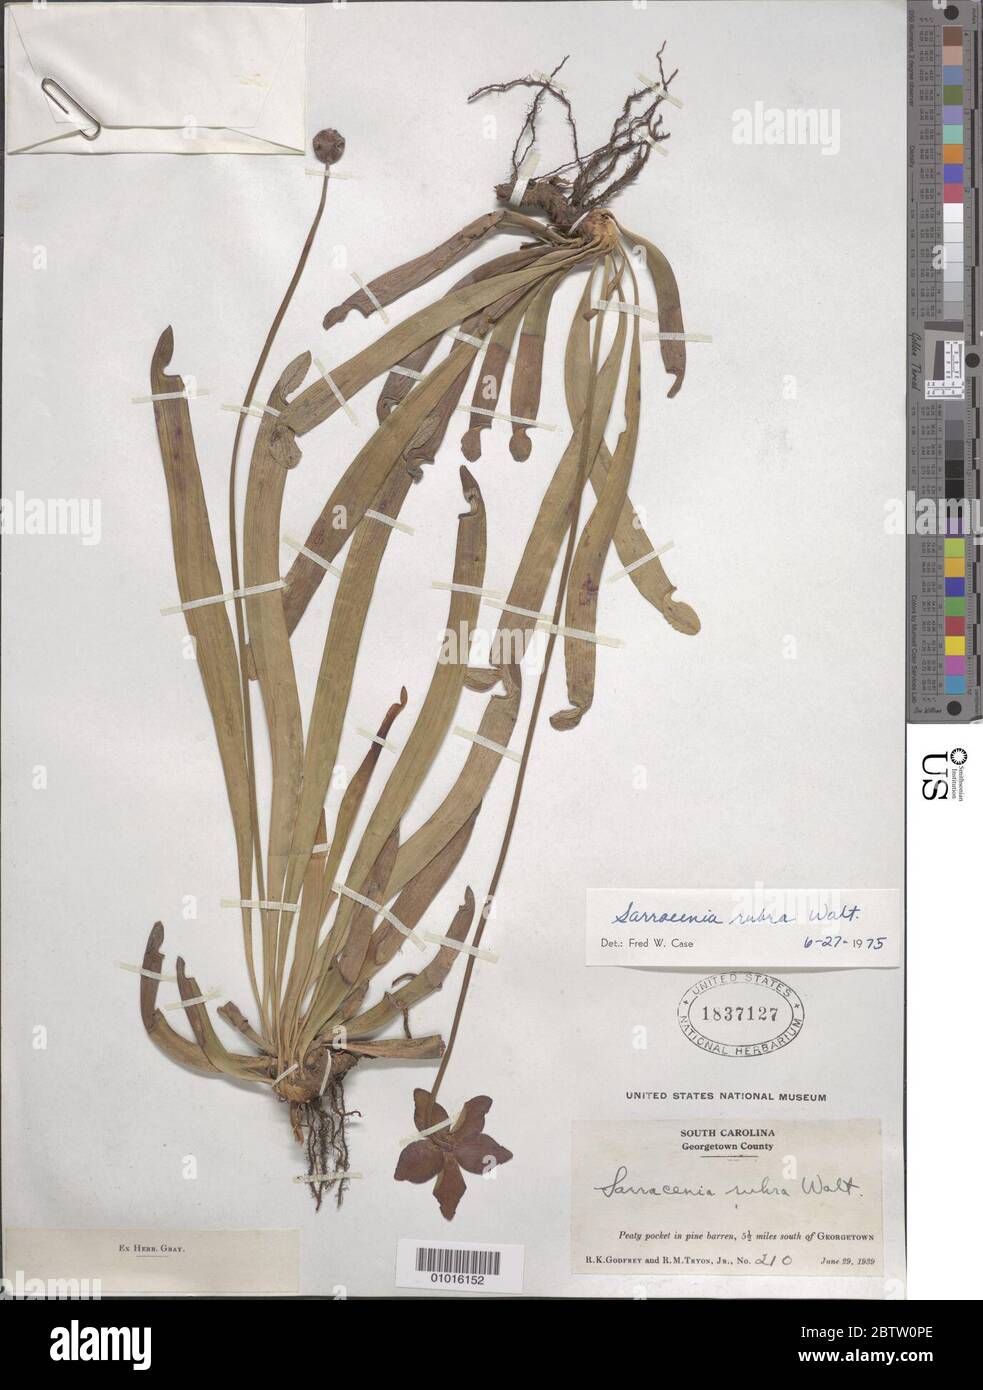 Sarracenia rubra Walter. Stock Photo